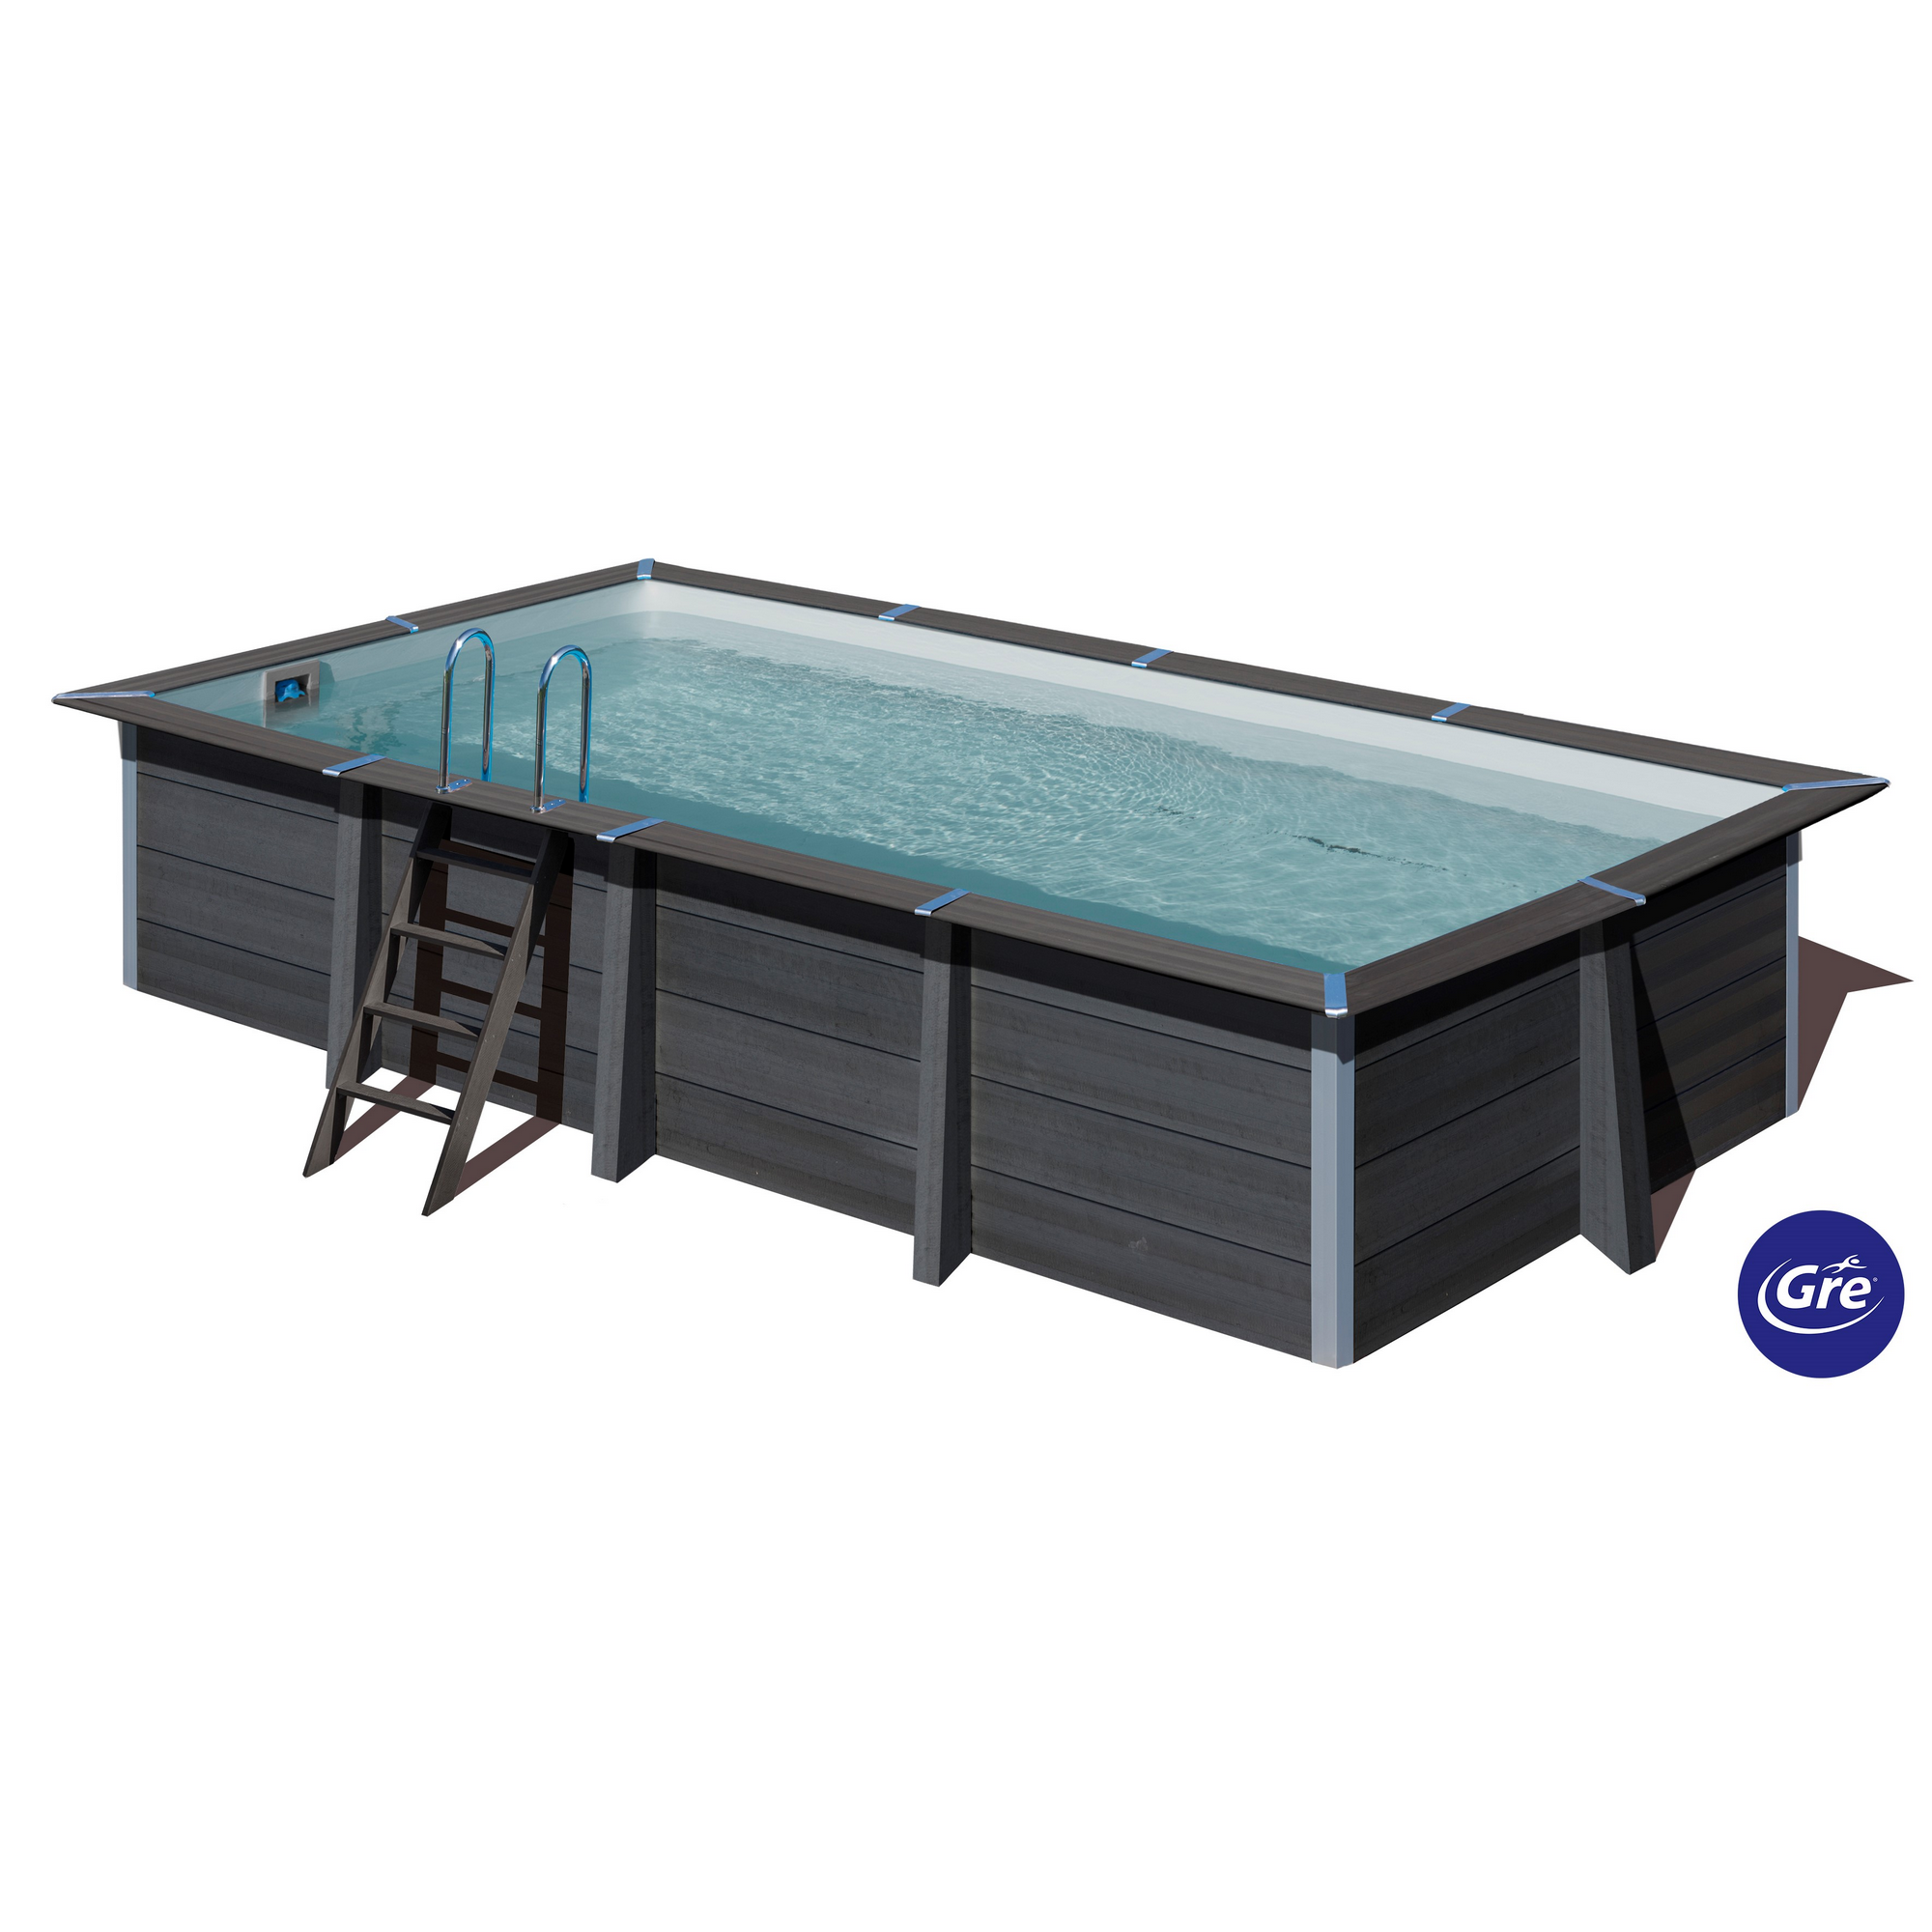 Composite Pool-Set 'Avantgarde' 326 x 124 x 606 cm mit Sandfilter und Trittleiter + product picture